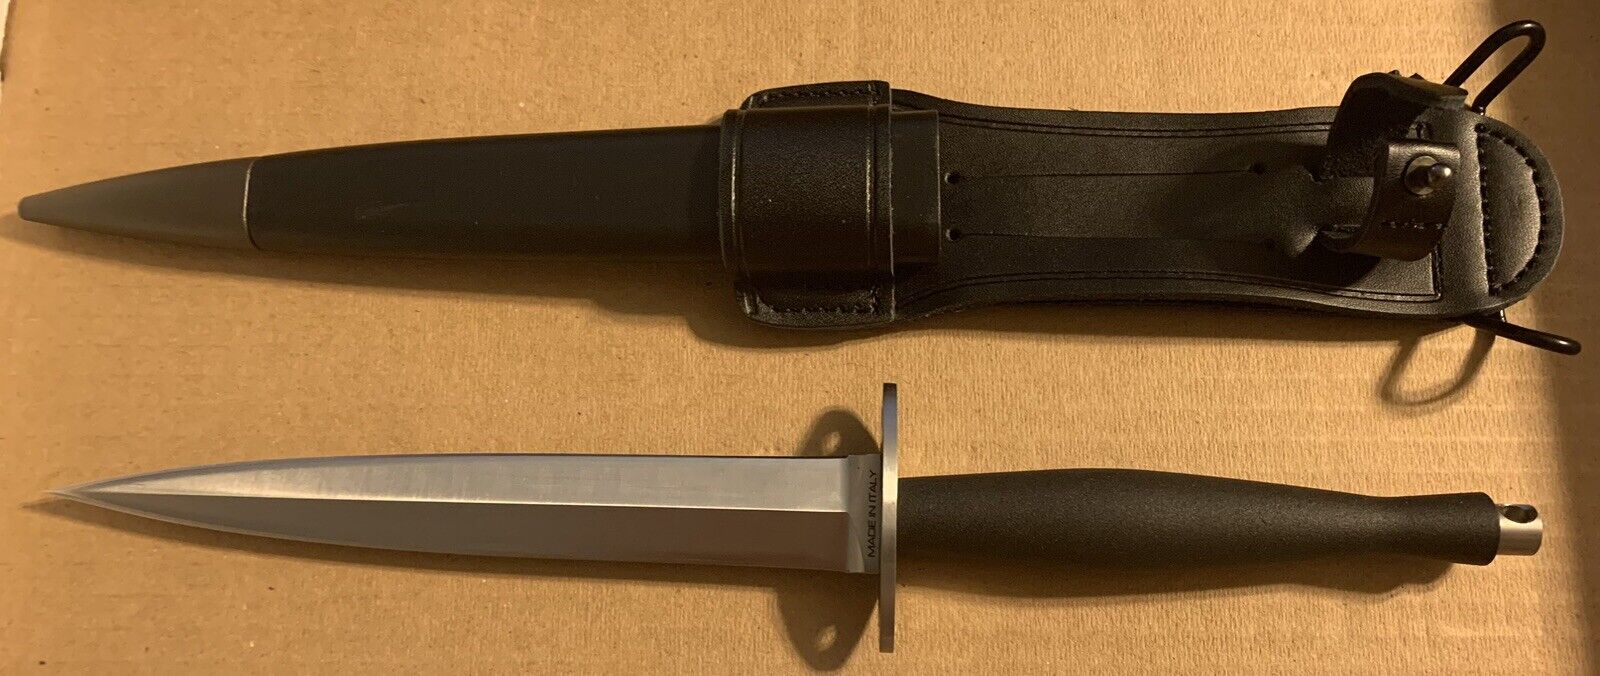 Extrema Ratio Commando Dagger Knife Reproduction